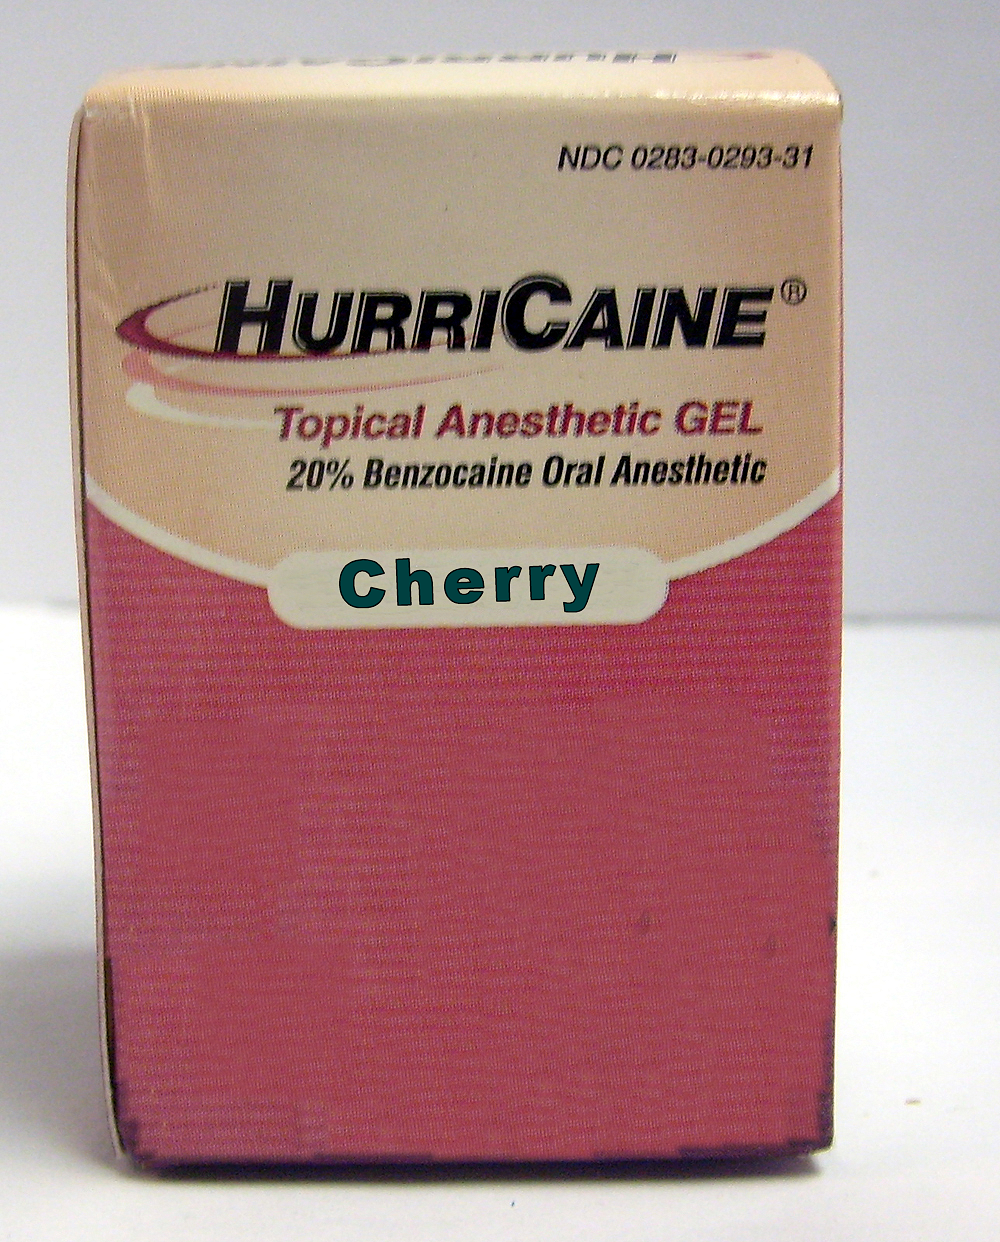 Hurricaine Gel Anesthetic - Cherry